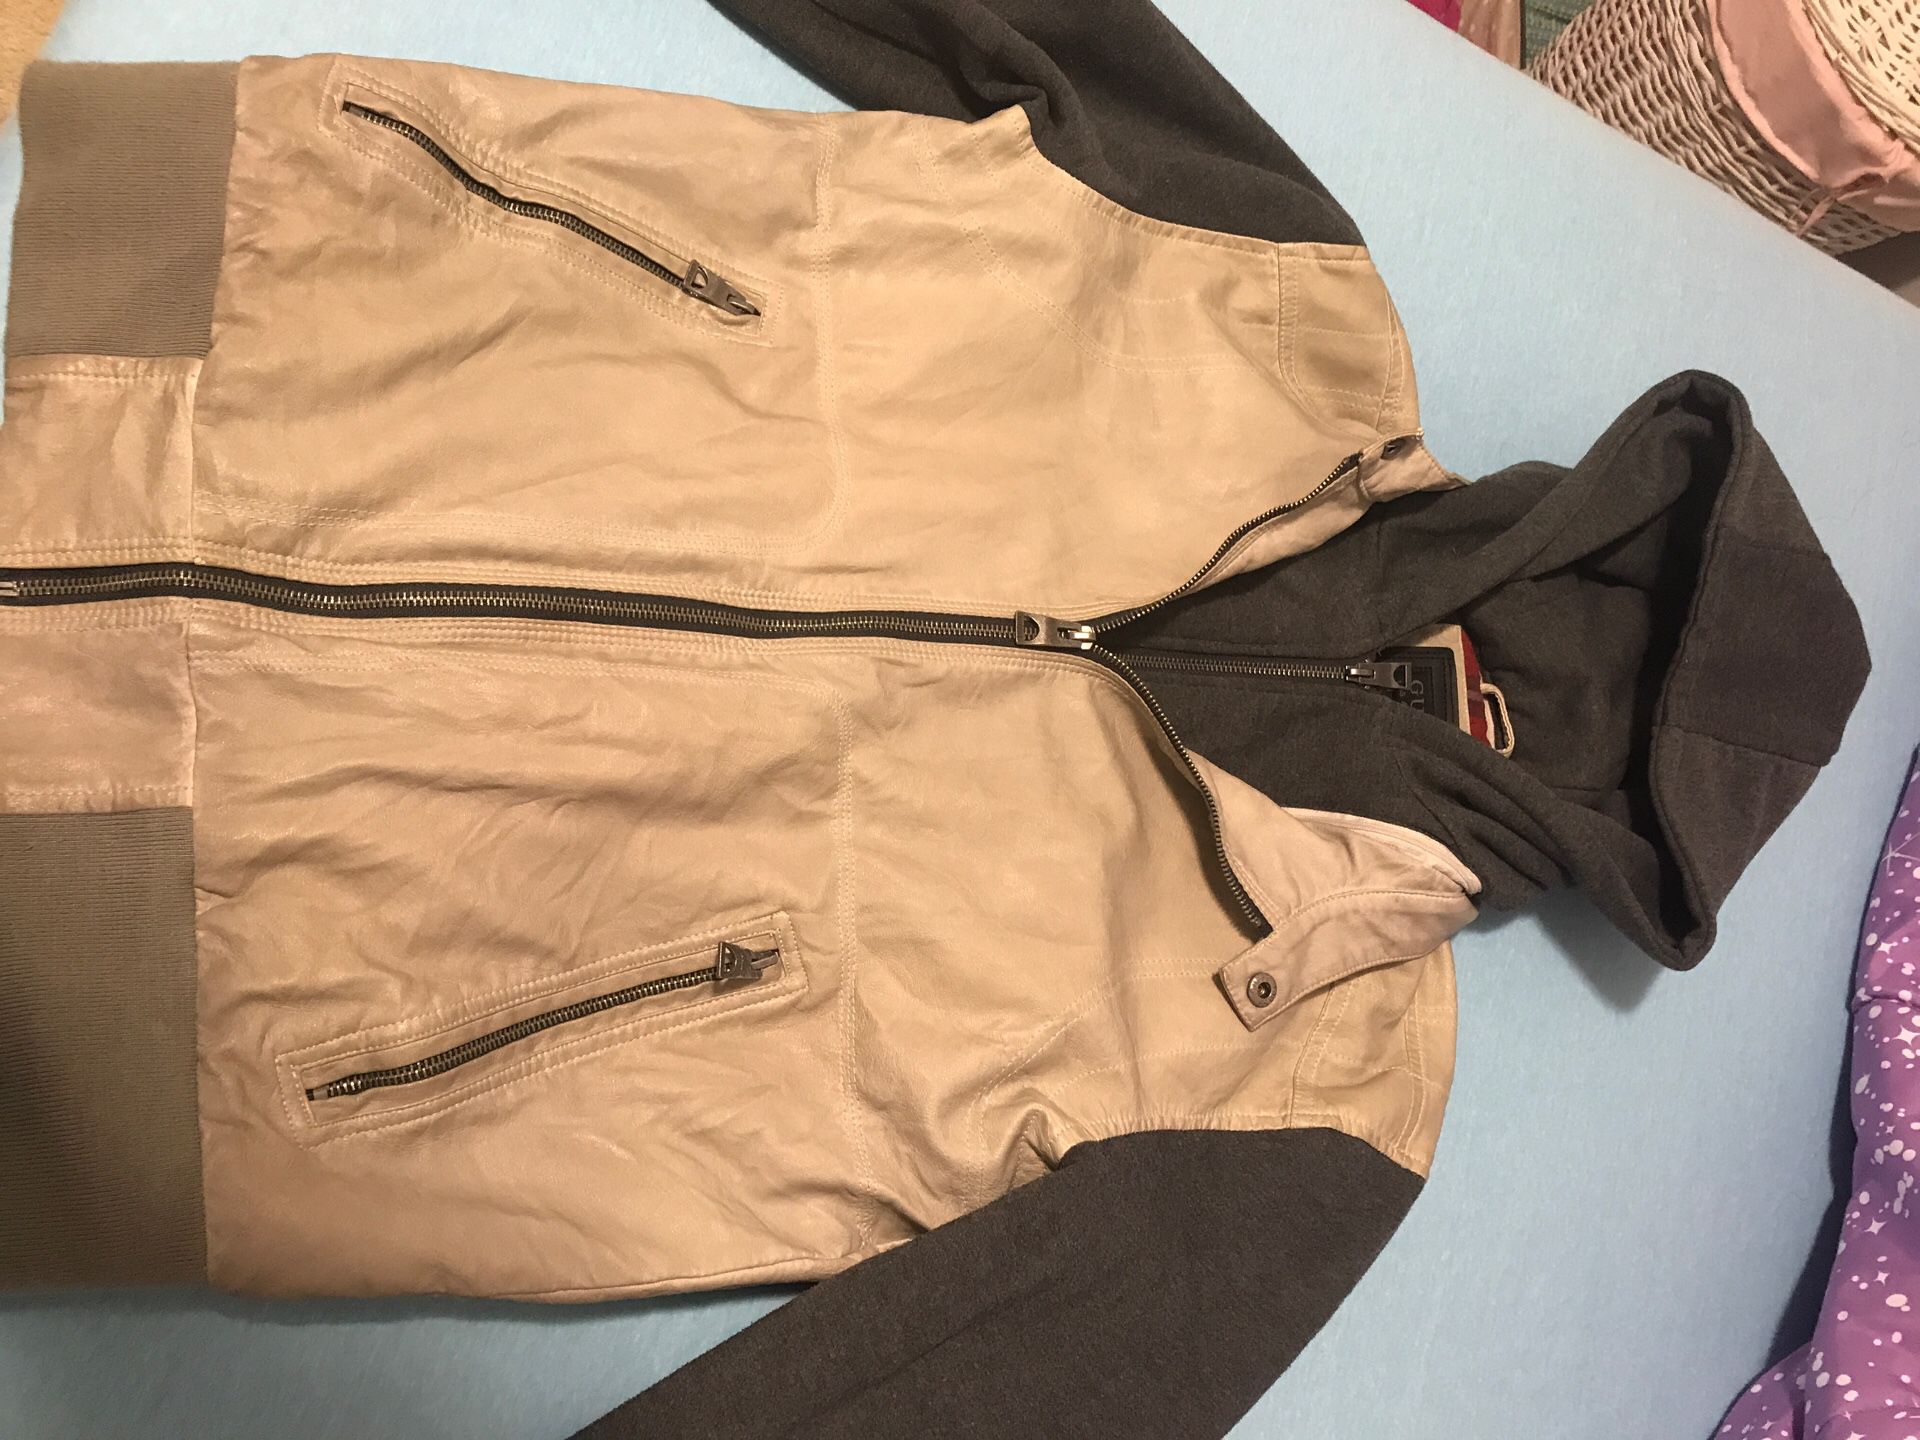 Men’s leather jacket